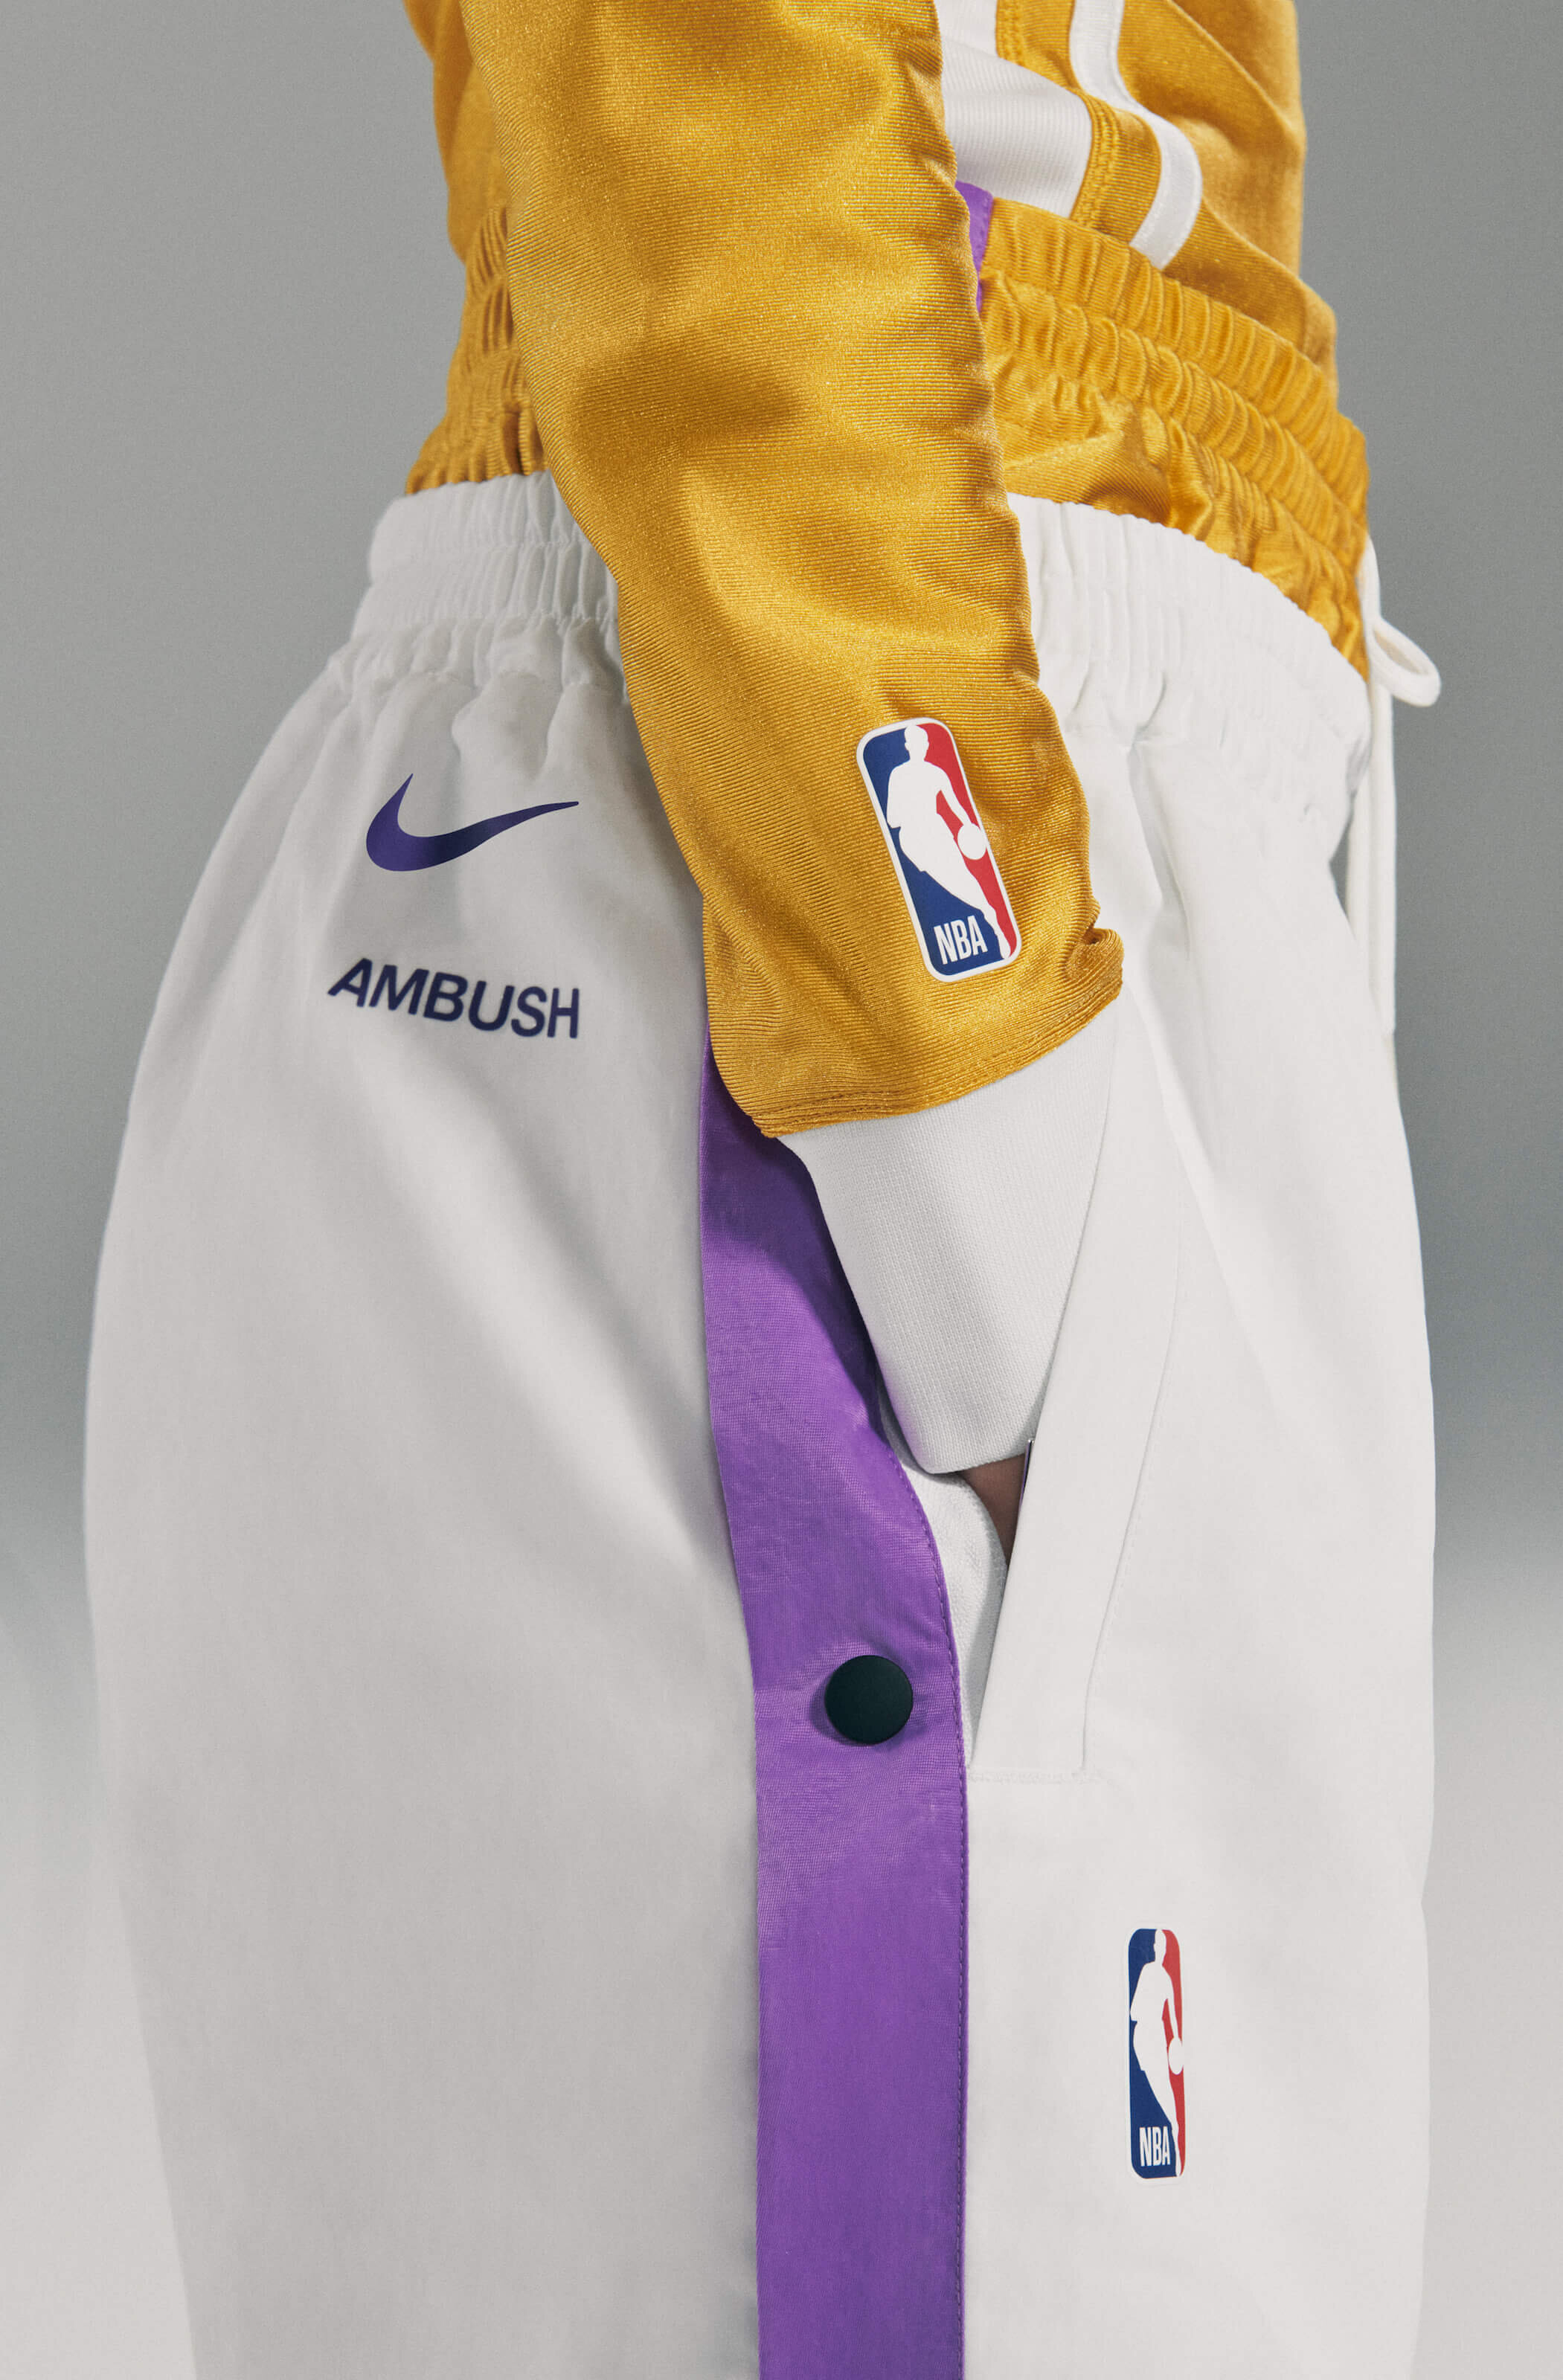 CNK-nike-x-ambush-nba-apparel-collection-Lakers-pants-and-shirt.jpg